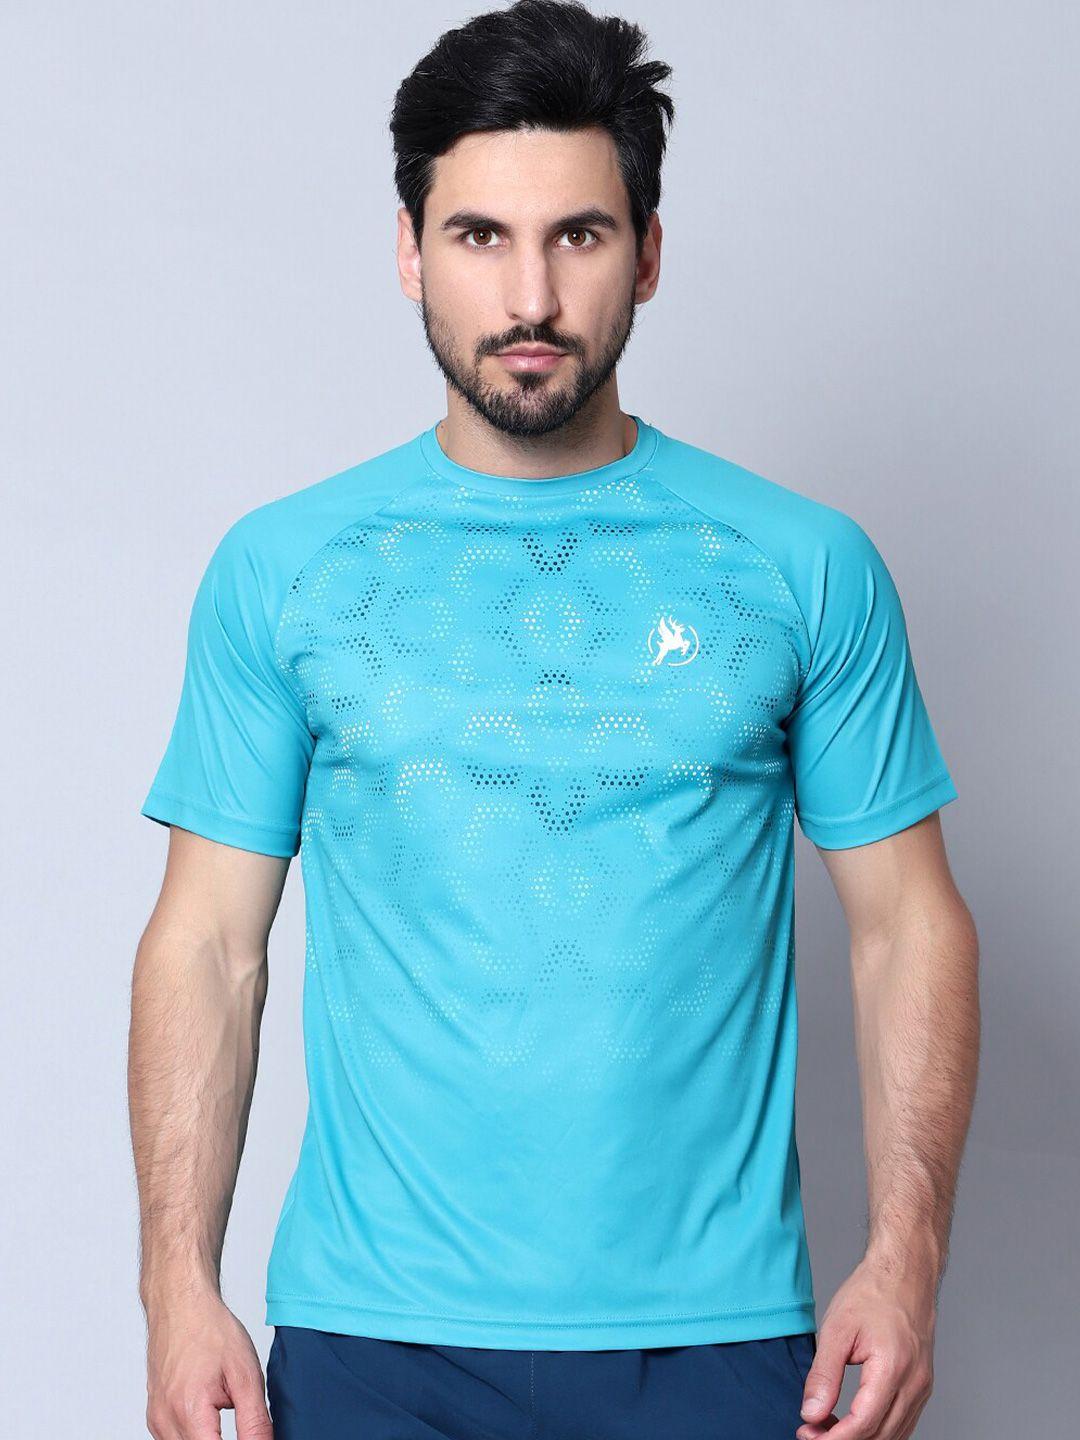 trenz geometric printed raglan sleeves techfit athletic sports t-shirt